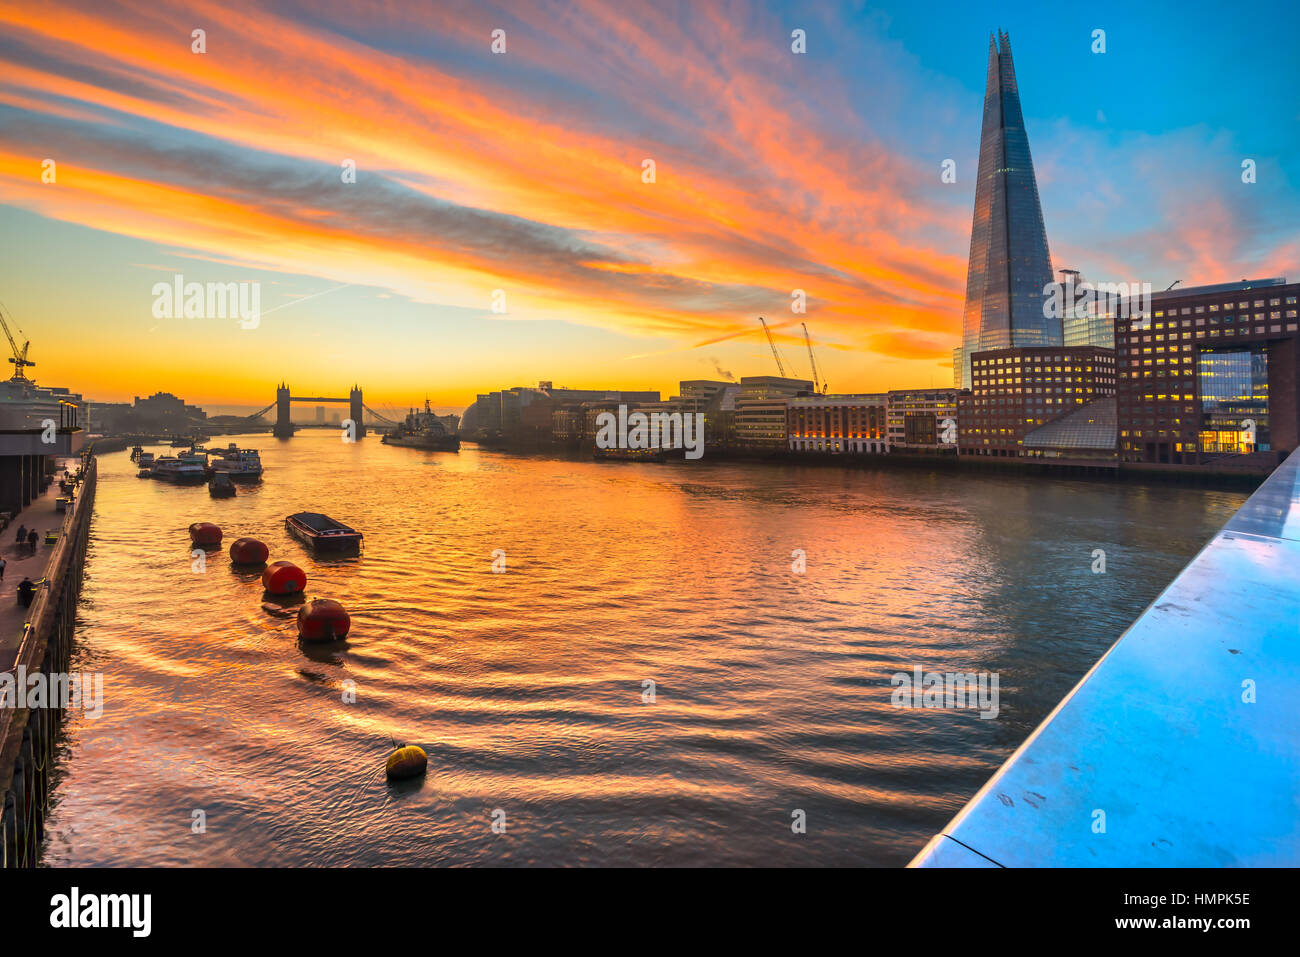 Beautiful sunset over London, with the Shard and London Bridge. London, UK Stock Photo